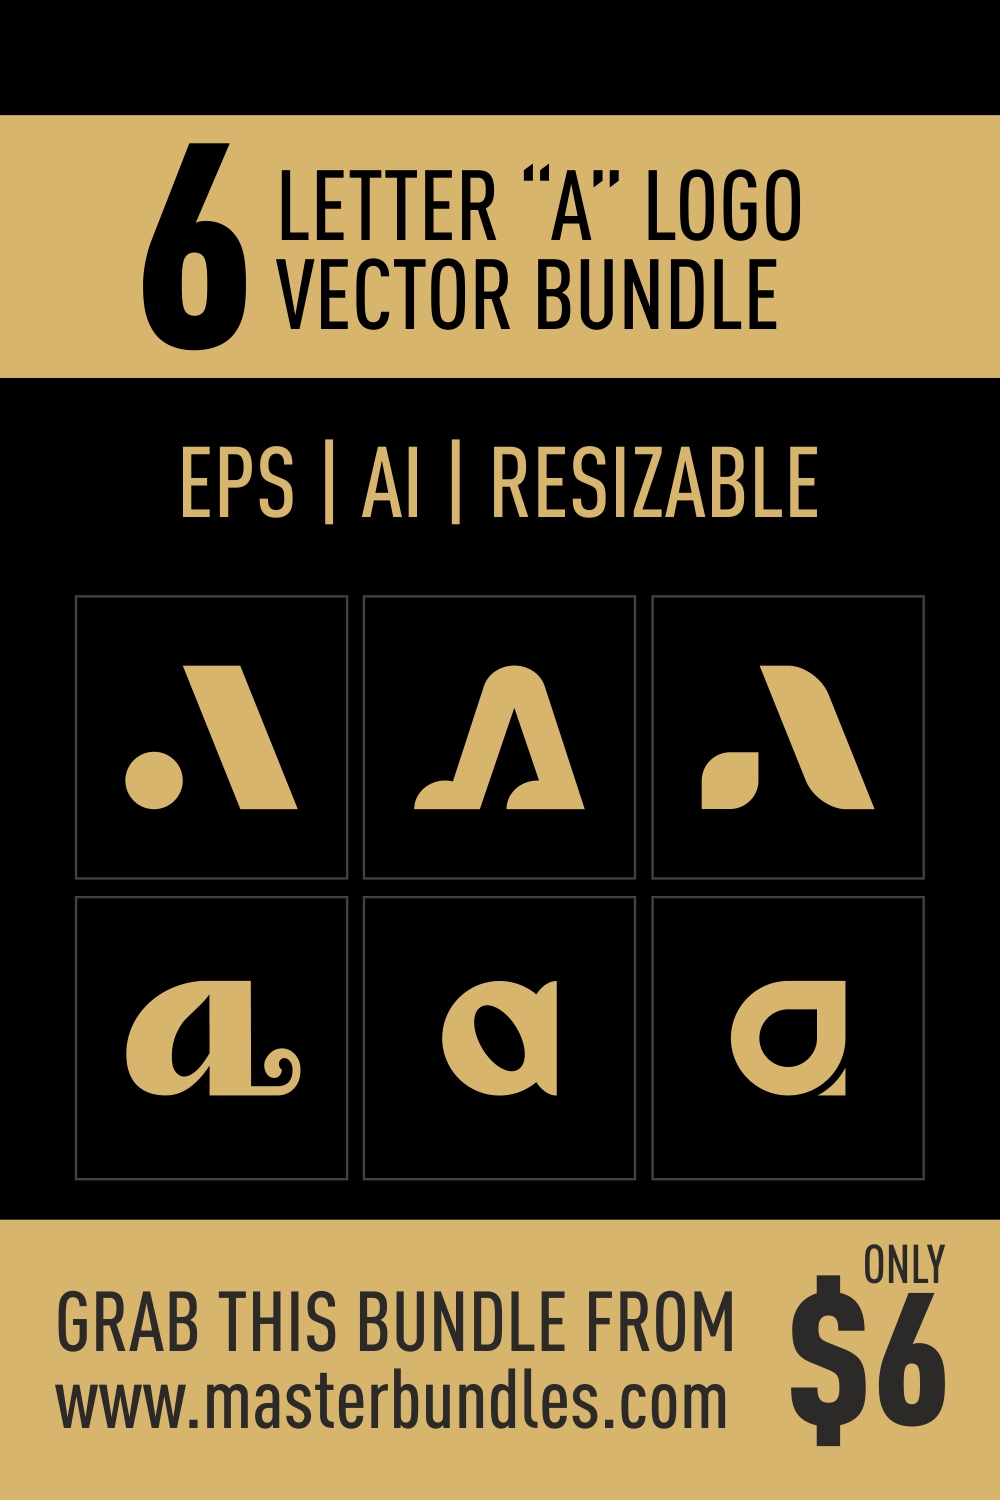 Letter "A" Logo Vector Bundle pinterest image.